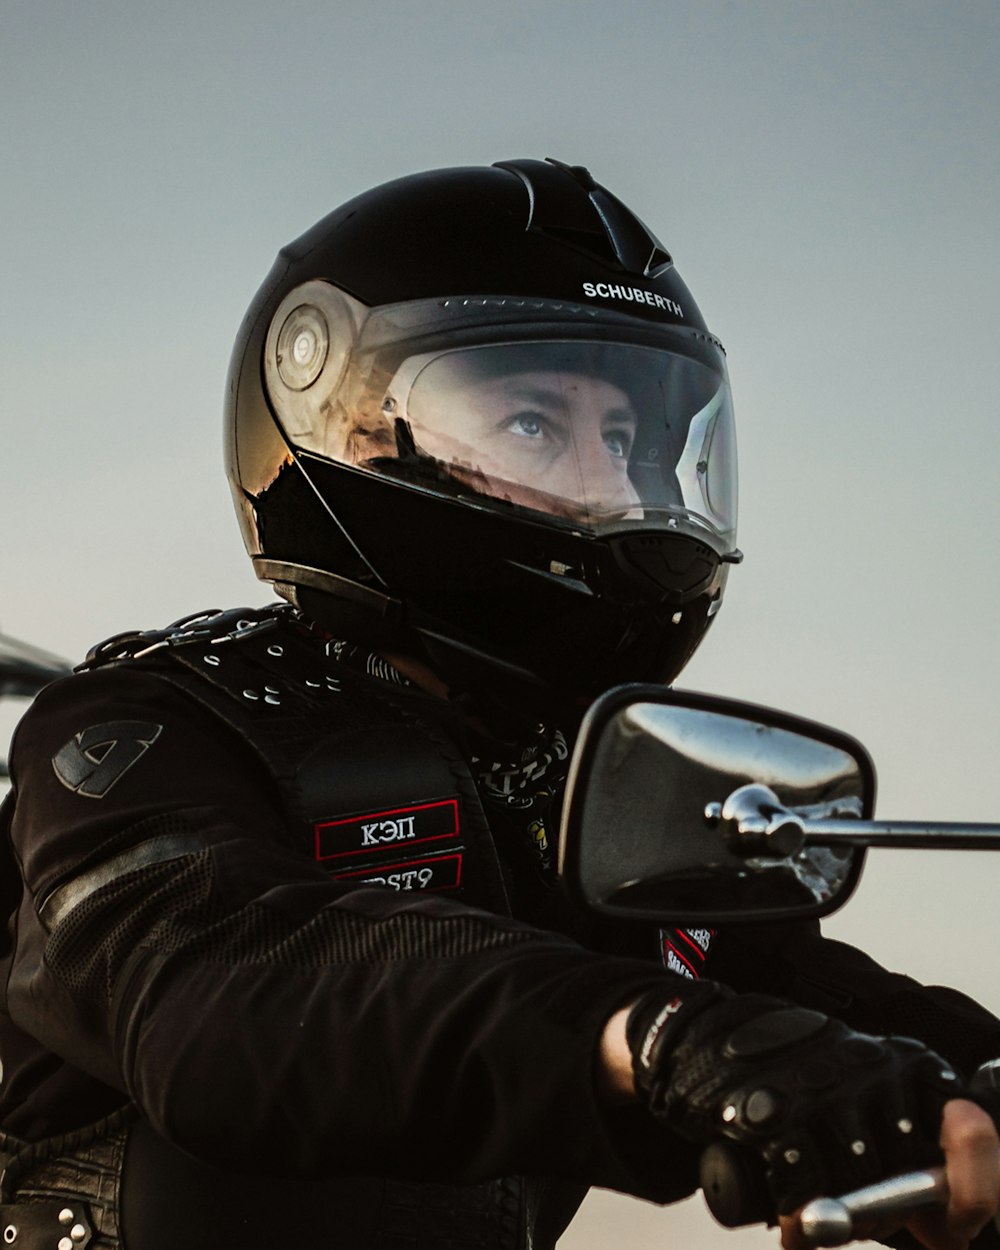 man wearing black helmet riding on motorcycle